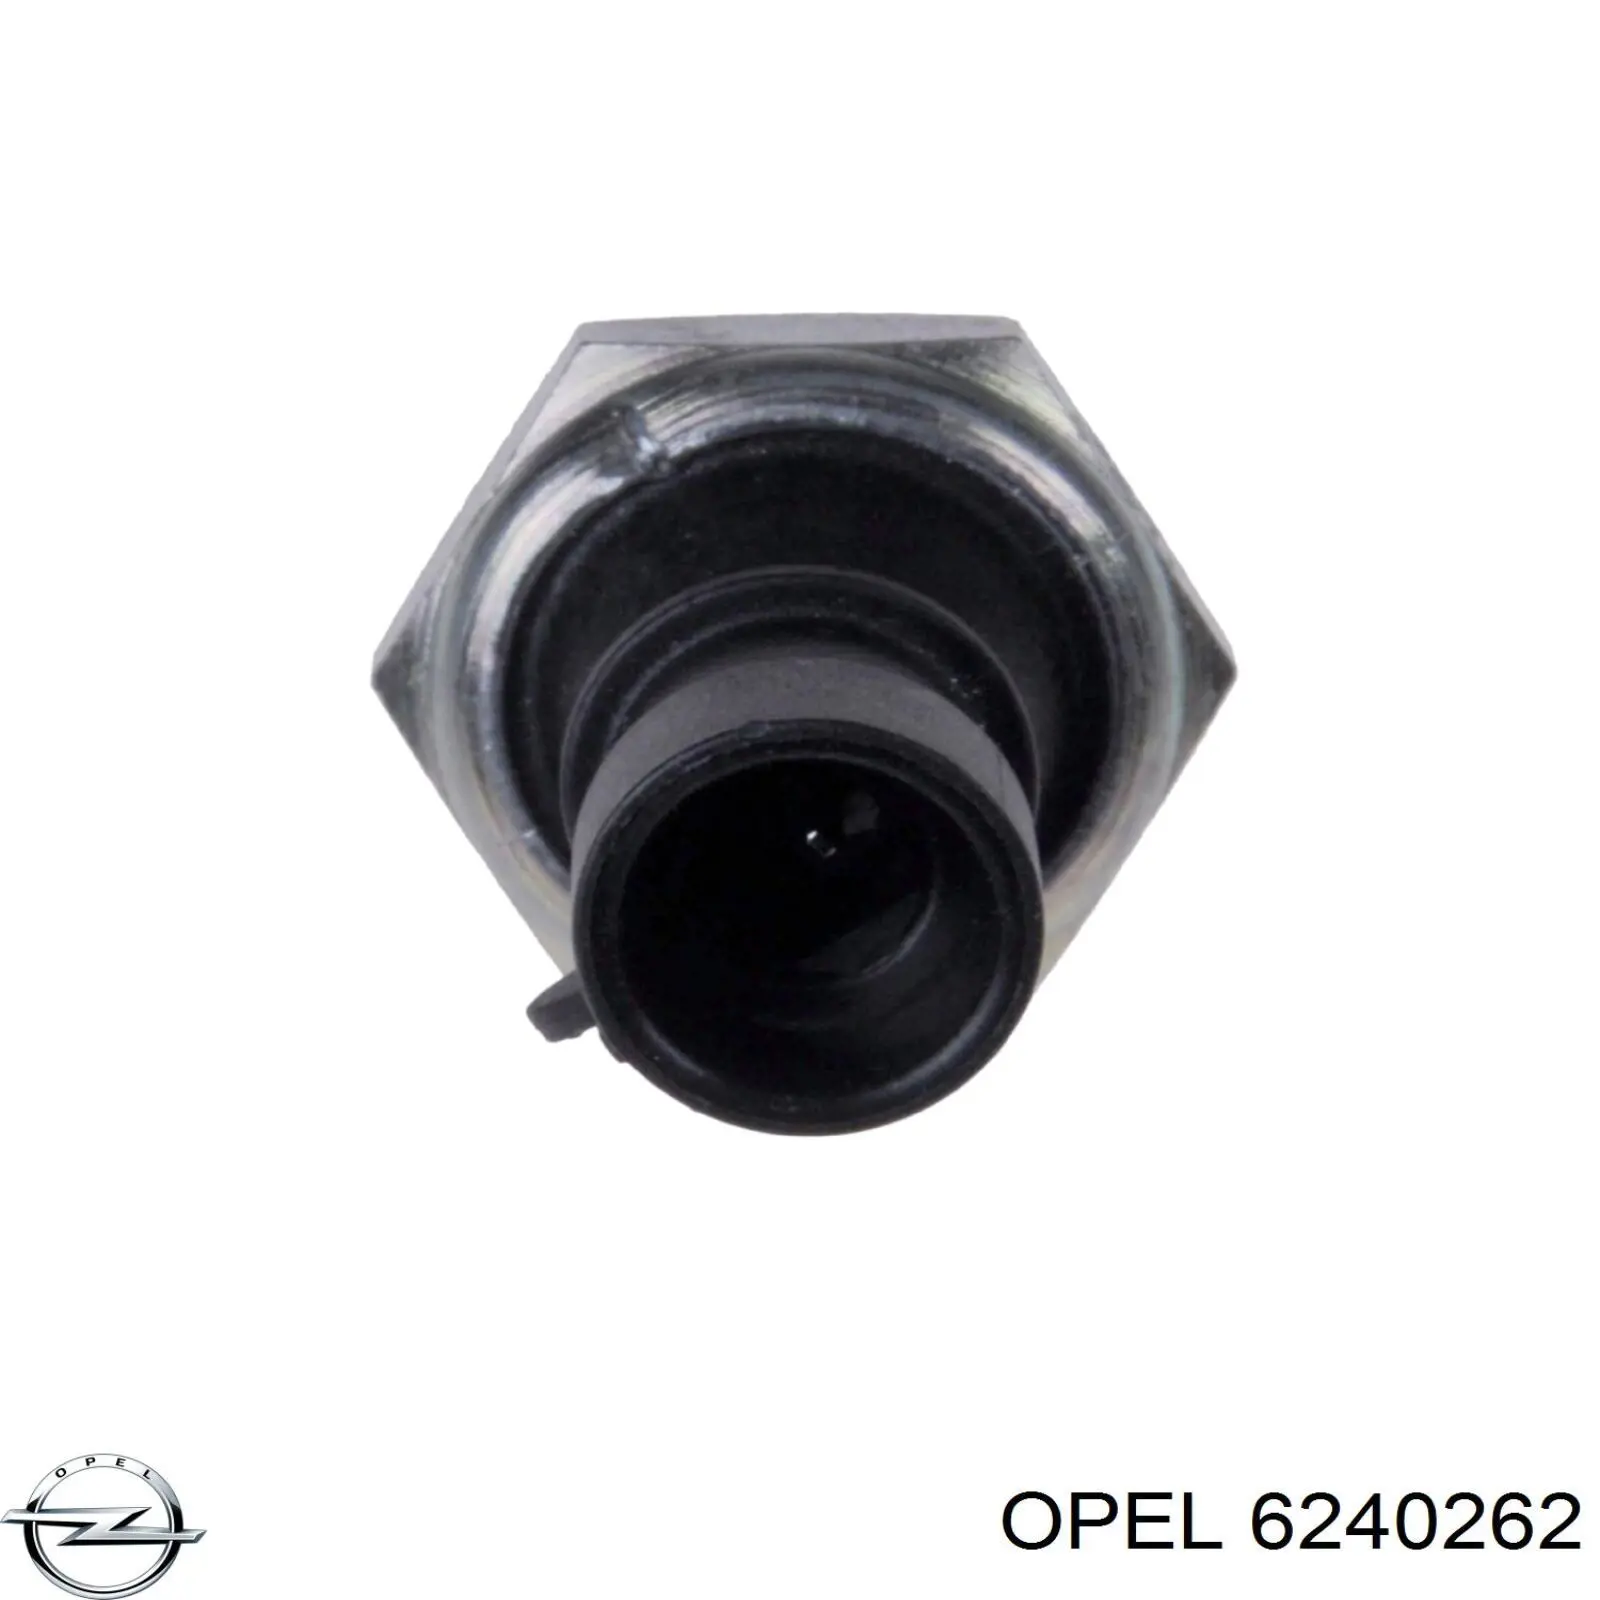 6240262 Opel sensor de presión de aceite